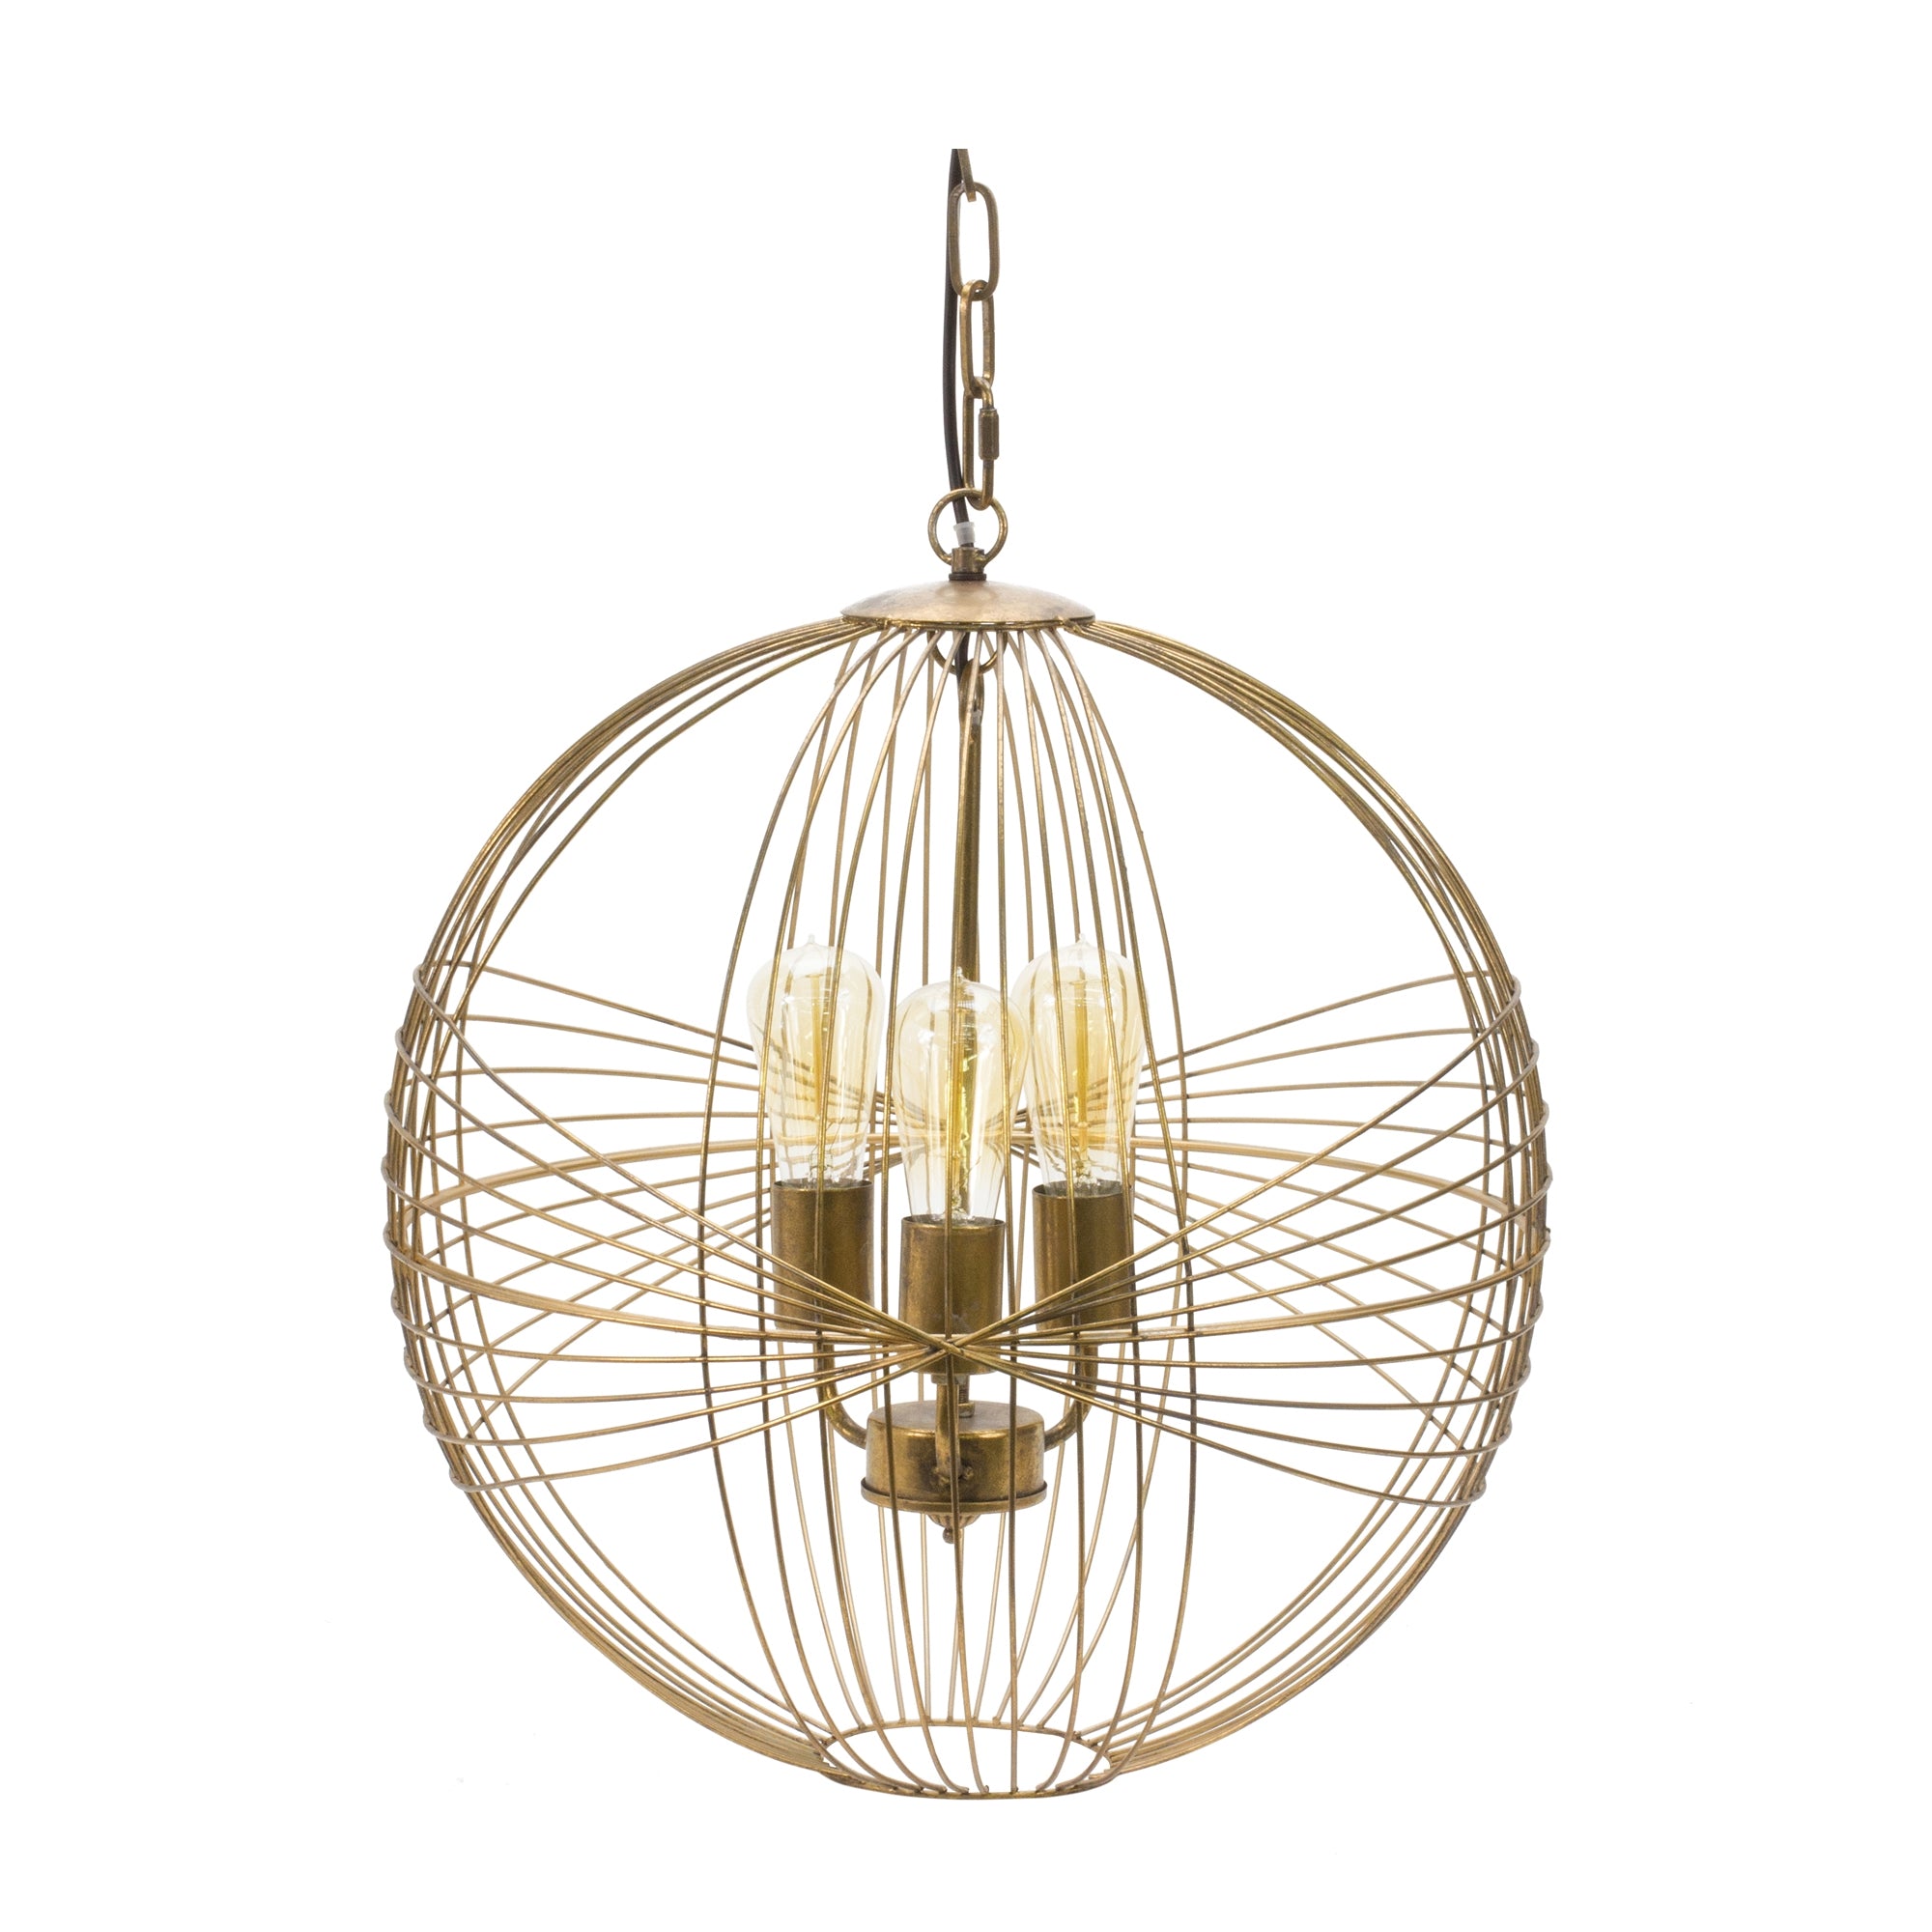 Intricate Metal Sphere Hanging Lamp 20"D